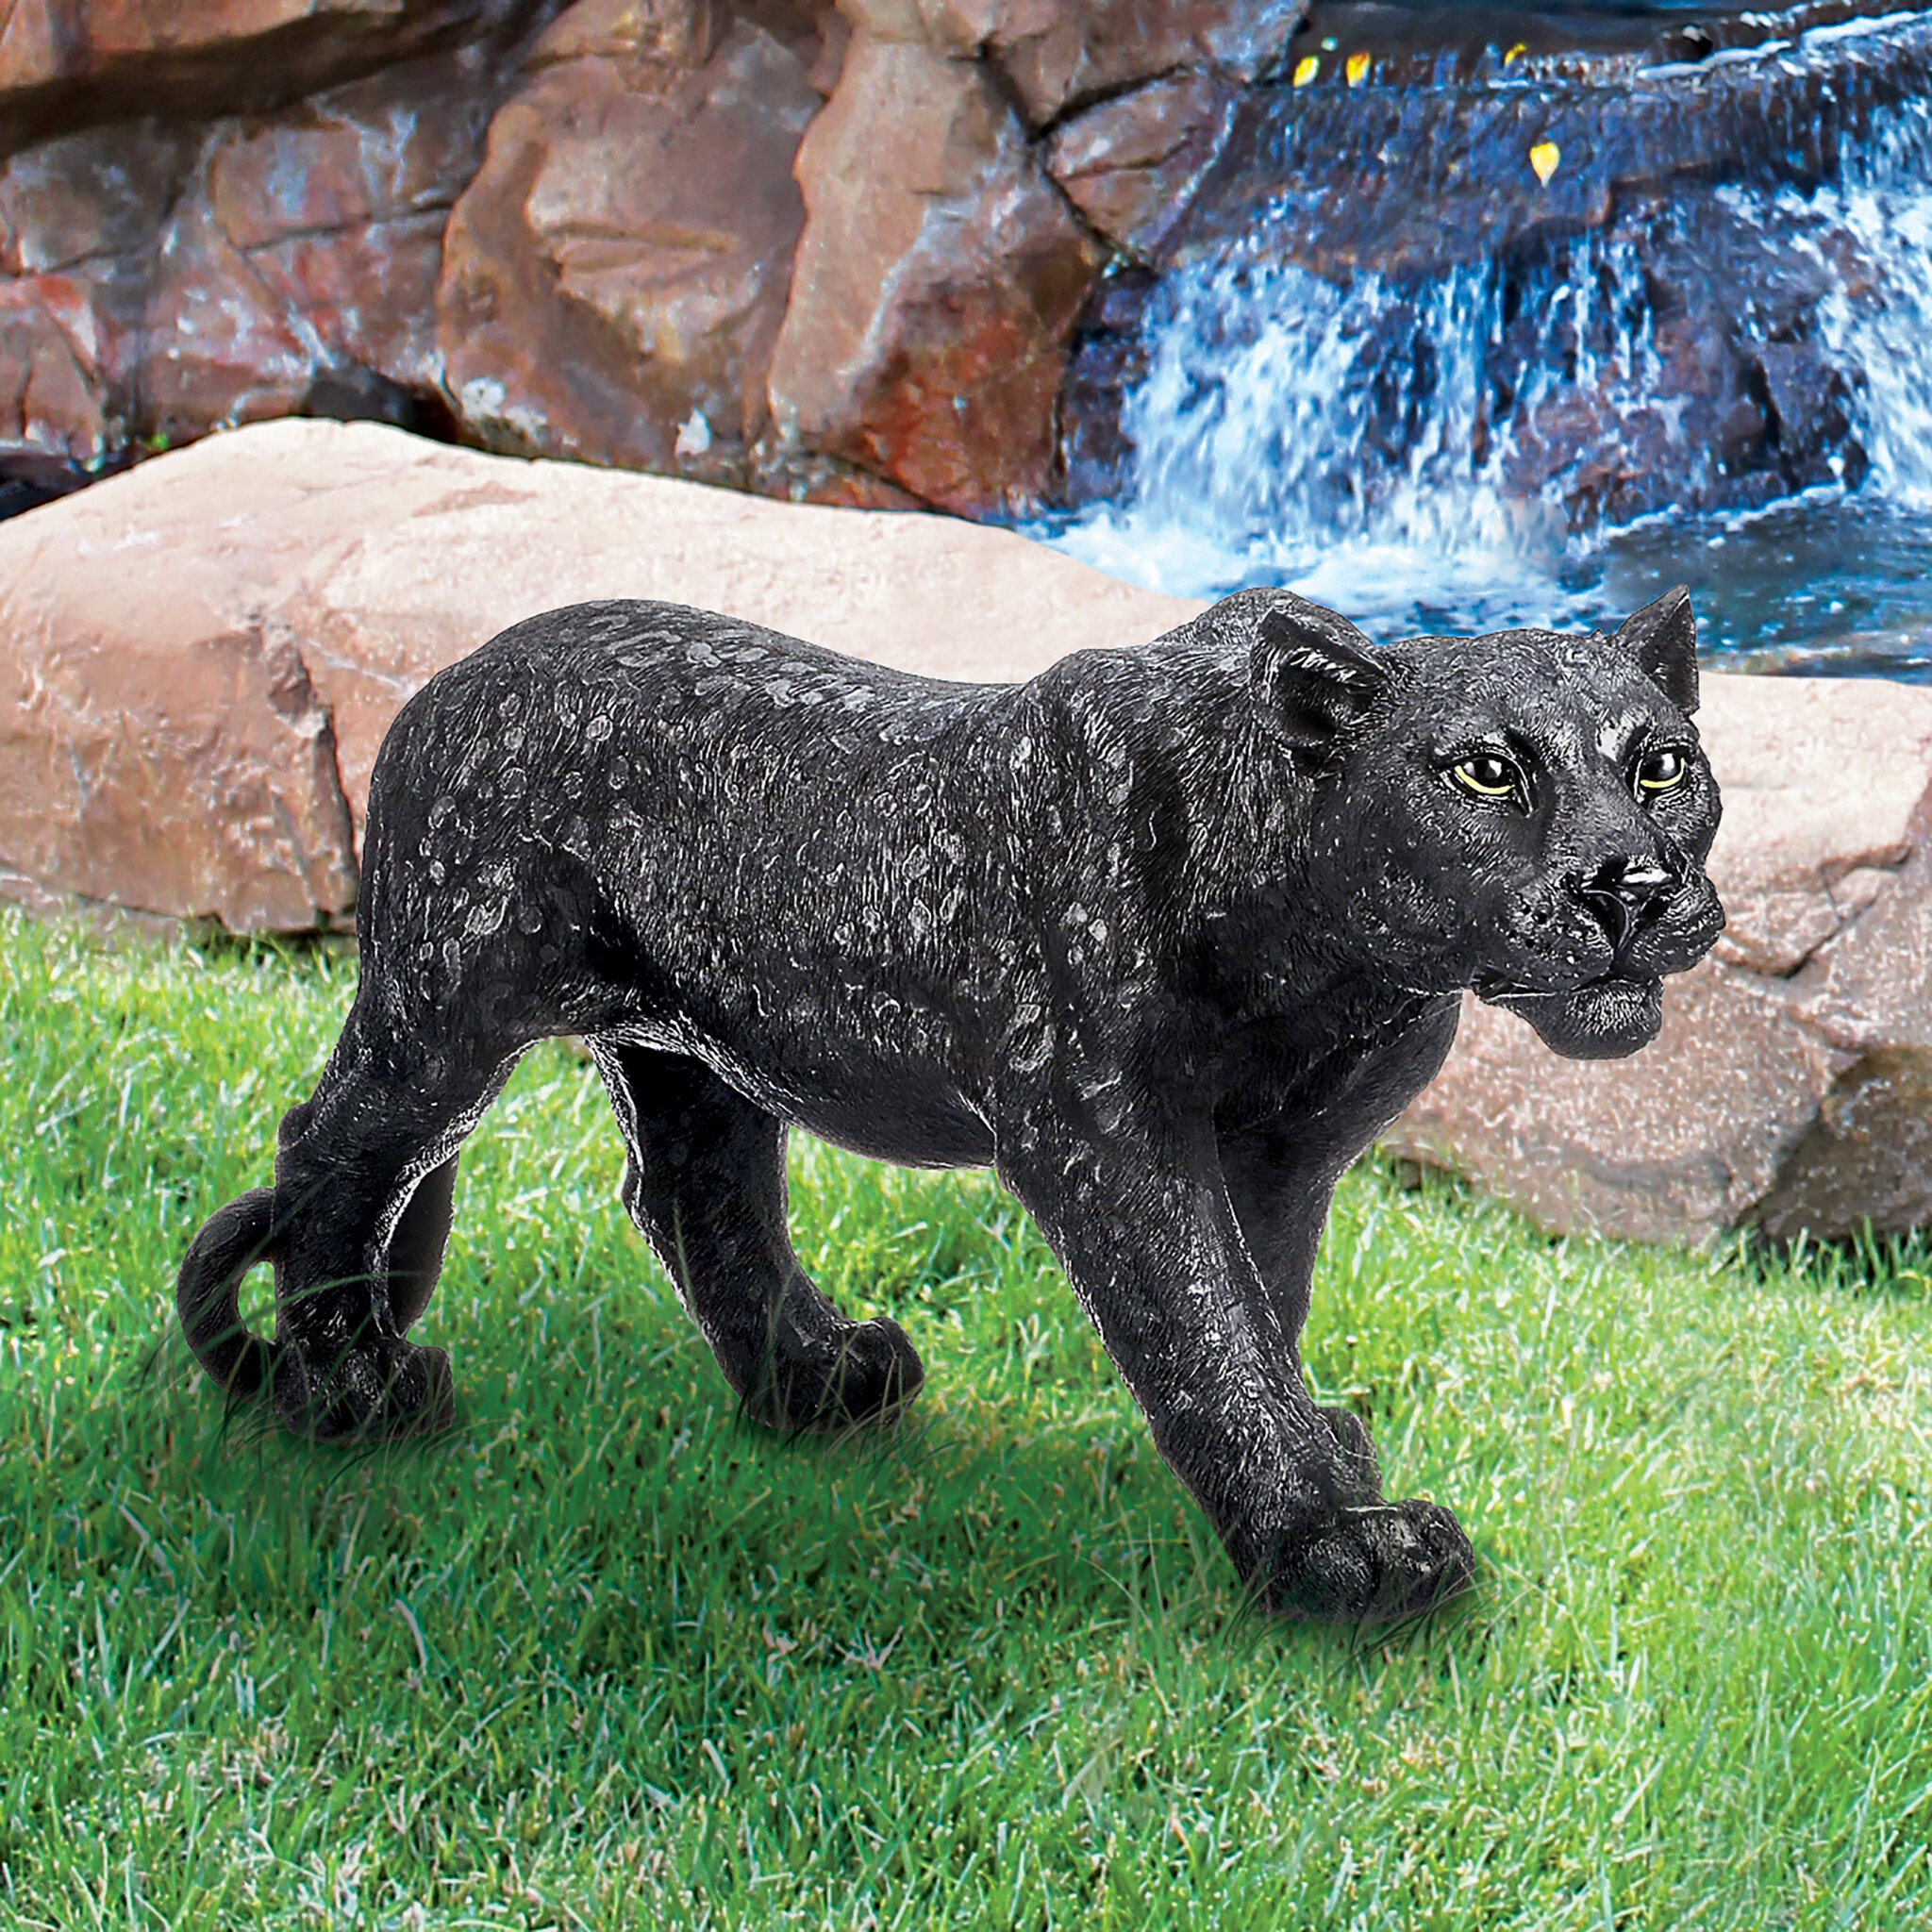 Design Toscano Statue panther noir occulte et Commentaires - Wayfair Canada